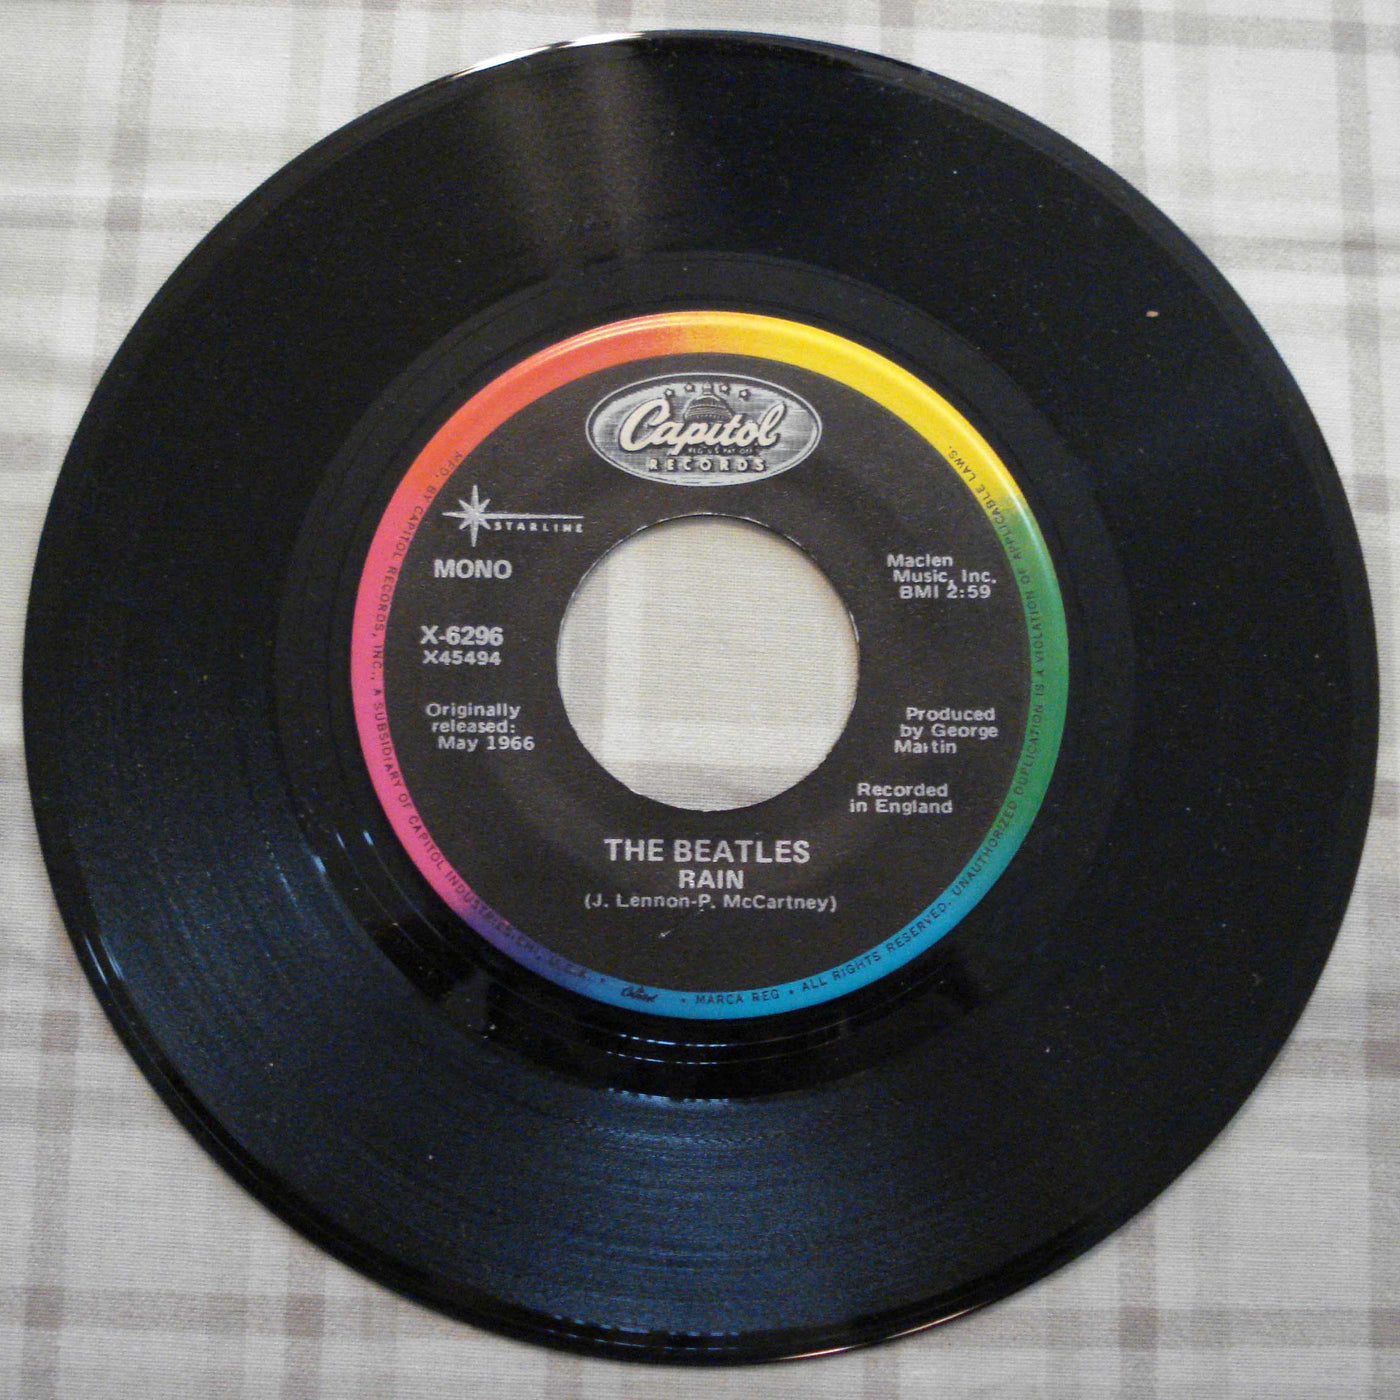 The Beatles - Paperback Writer-Rain Mono (1966) Vinyl Single 45rpm X-6296